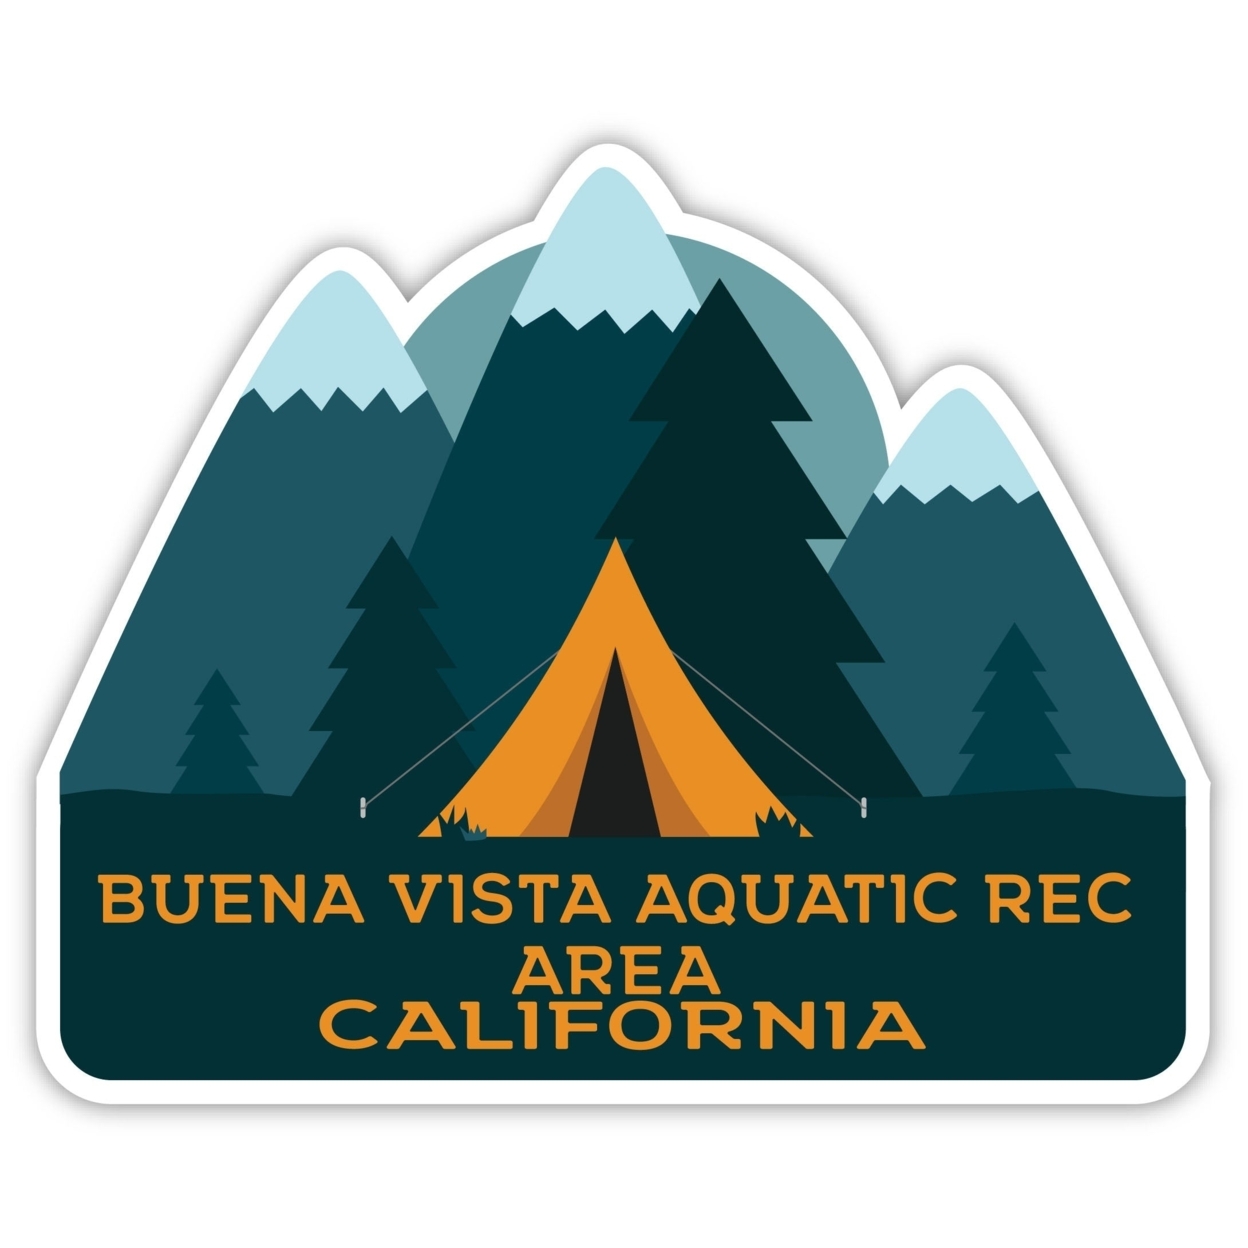 Buena Vista Aquatic Rec Area California Souvenir Decorative Stickers (Choose Theme And Size) - 4-Pack, 4-Inch, Tent